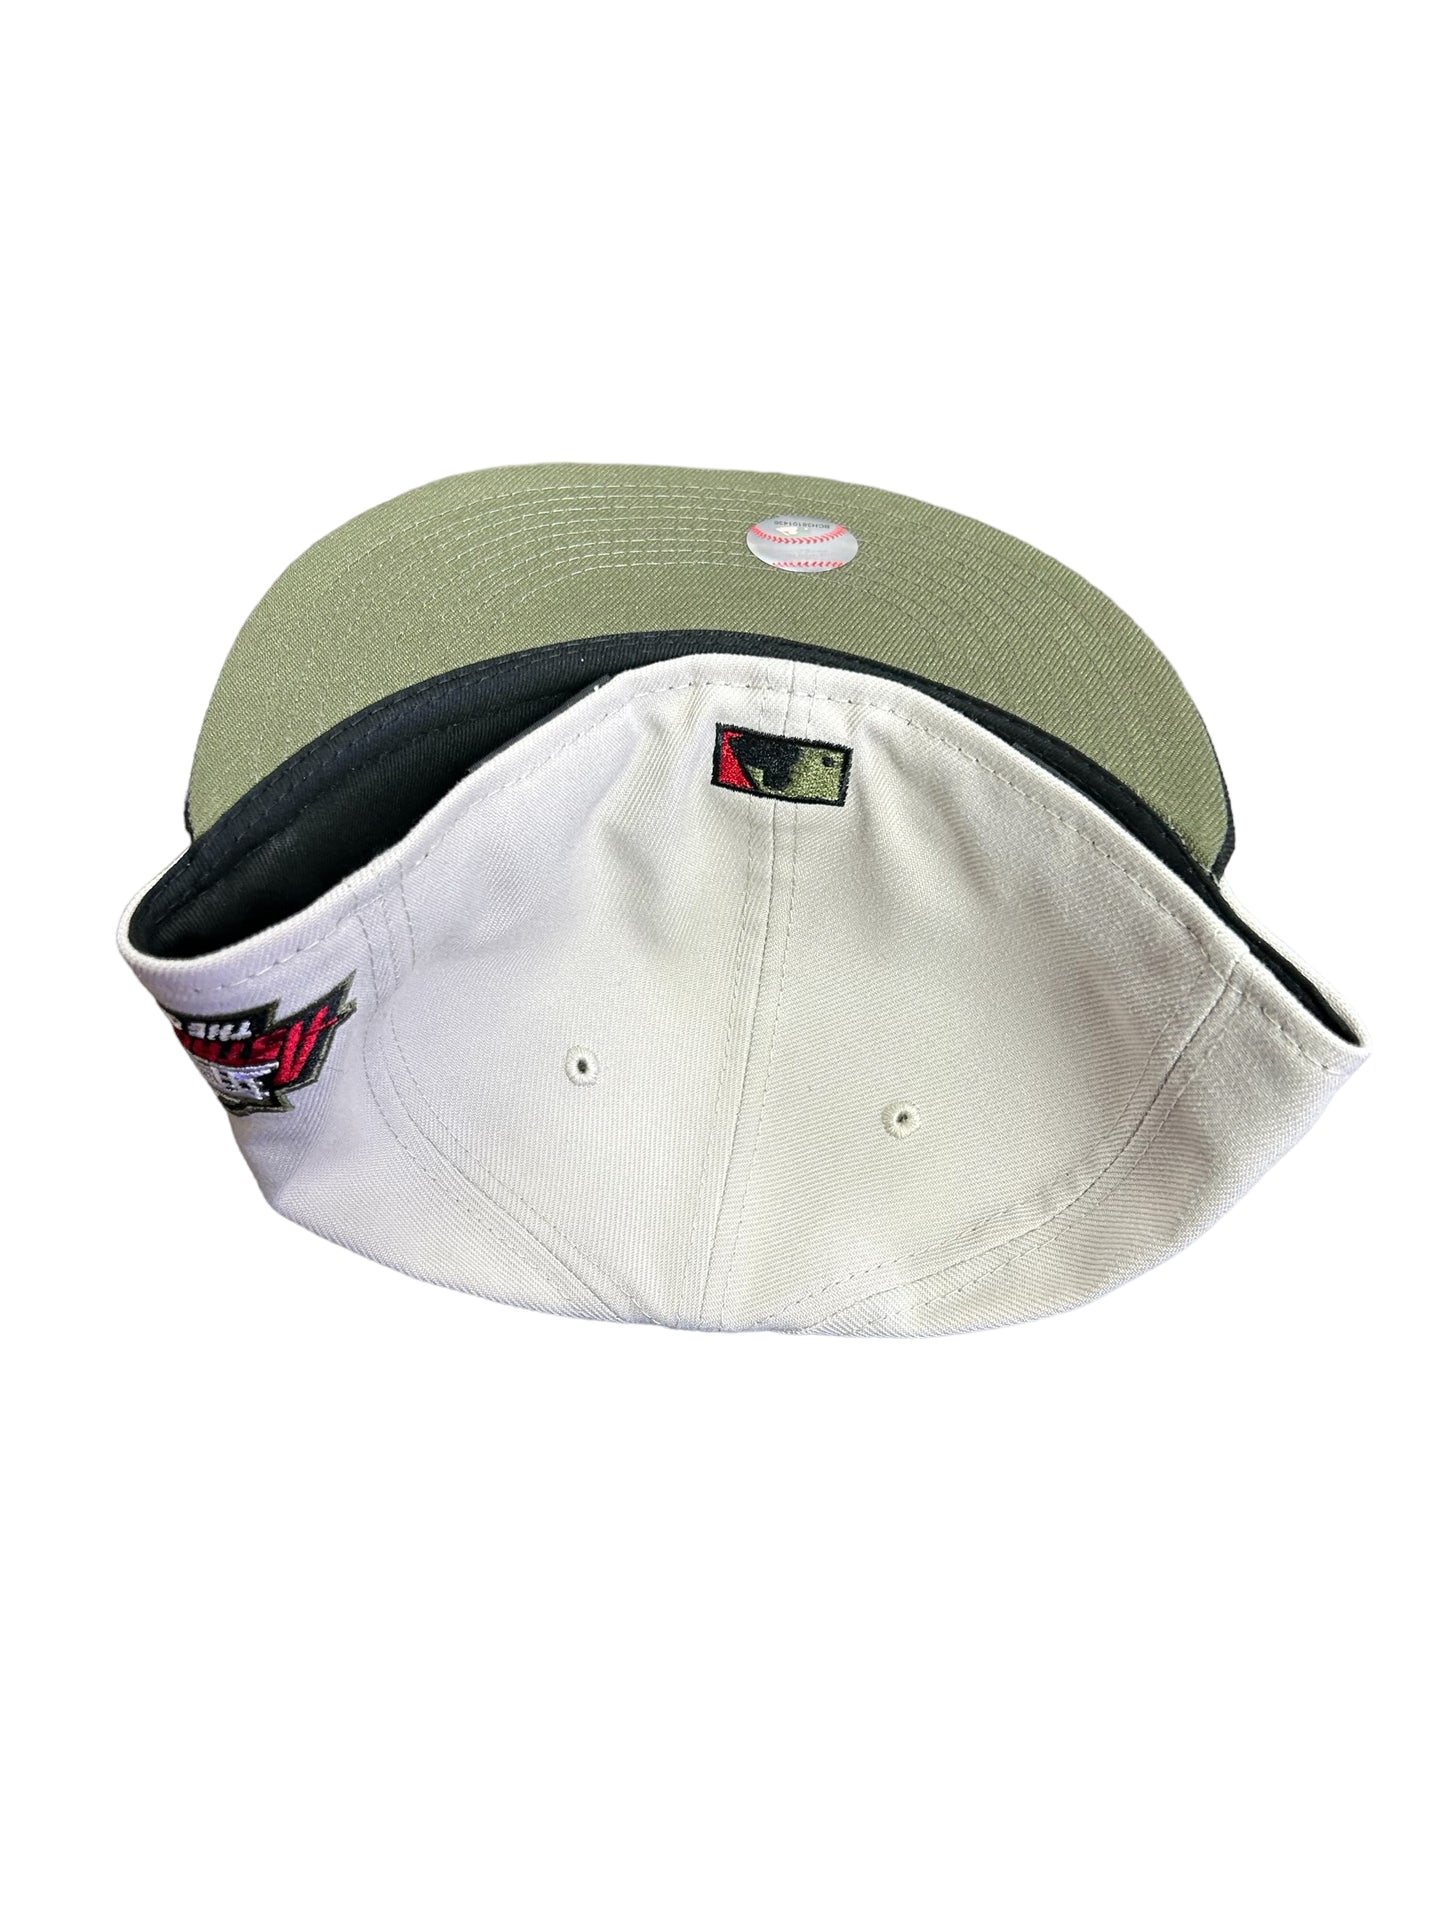 Houston Astros White/Olive Green Hat